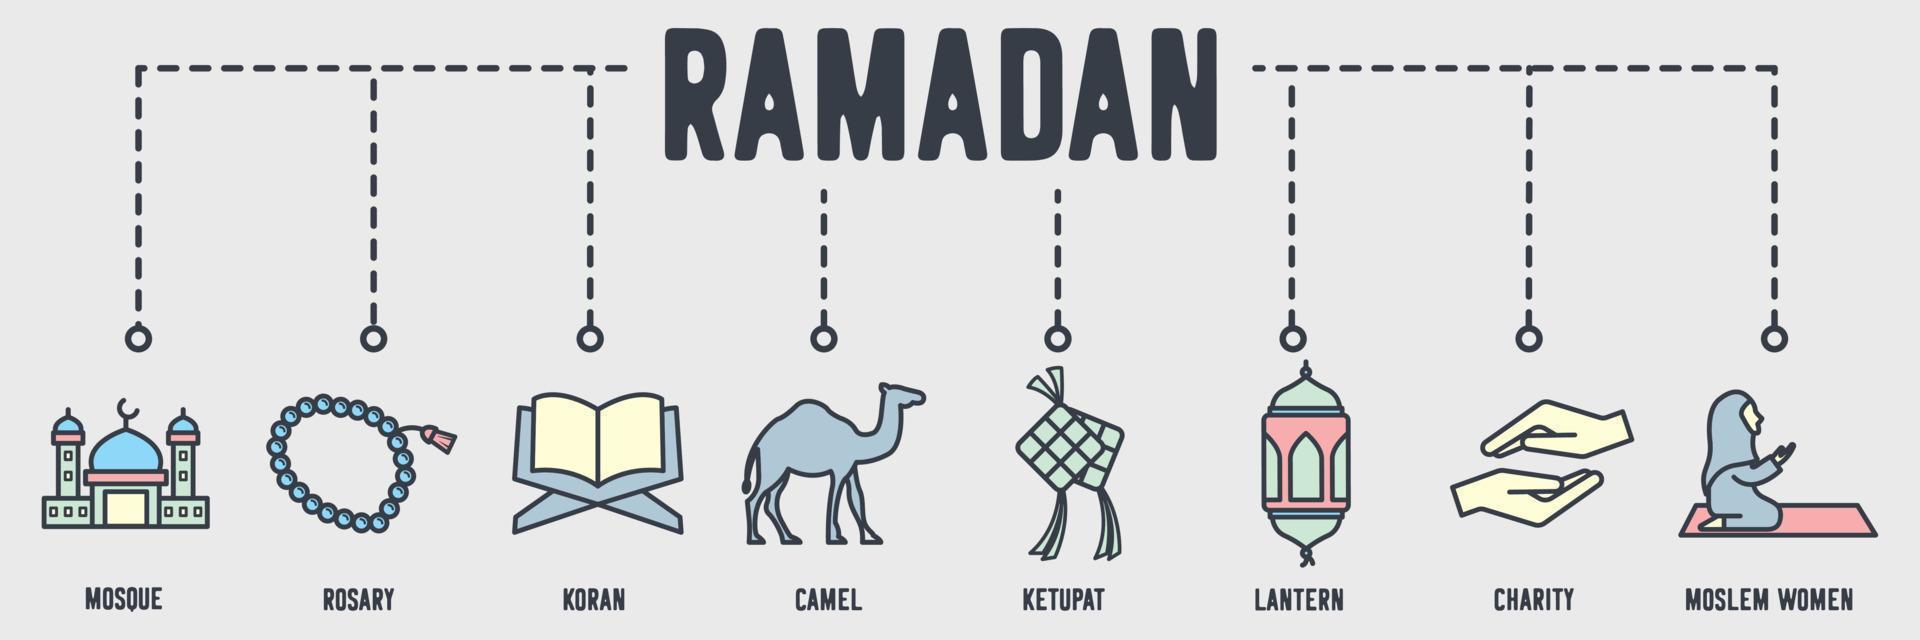 ramadan arabic islamic banner web icon. Mosque, Rosary, Koran, Camel, Ketupat, Lantern, Charity, Moslem women vector illustration concept.